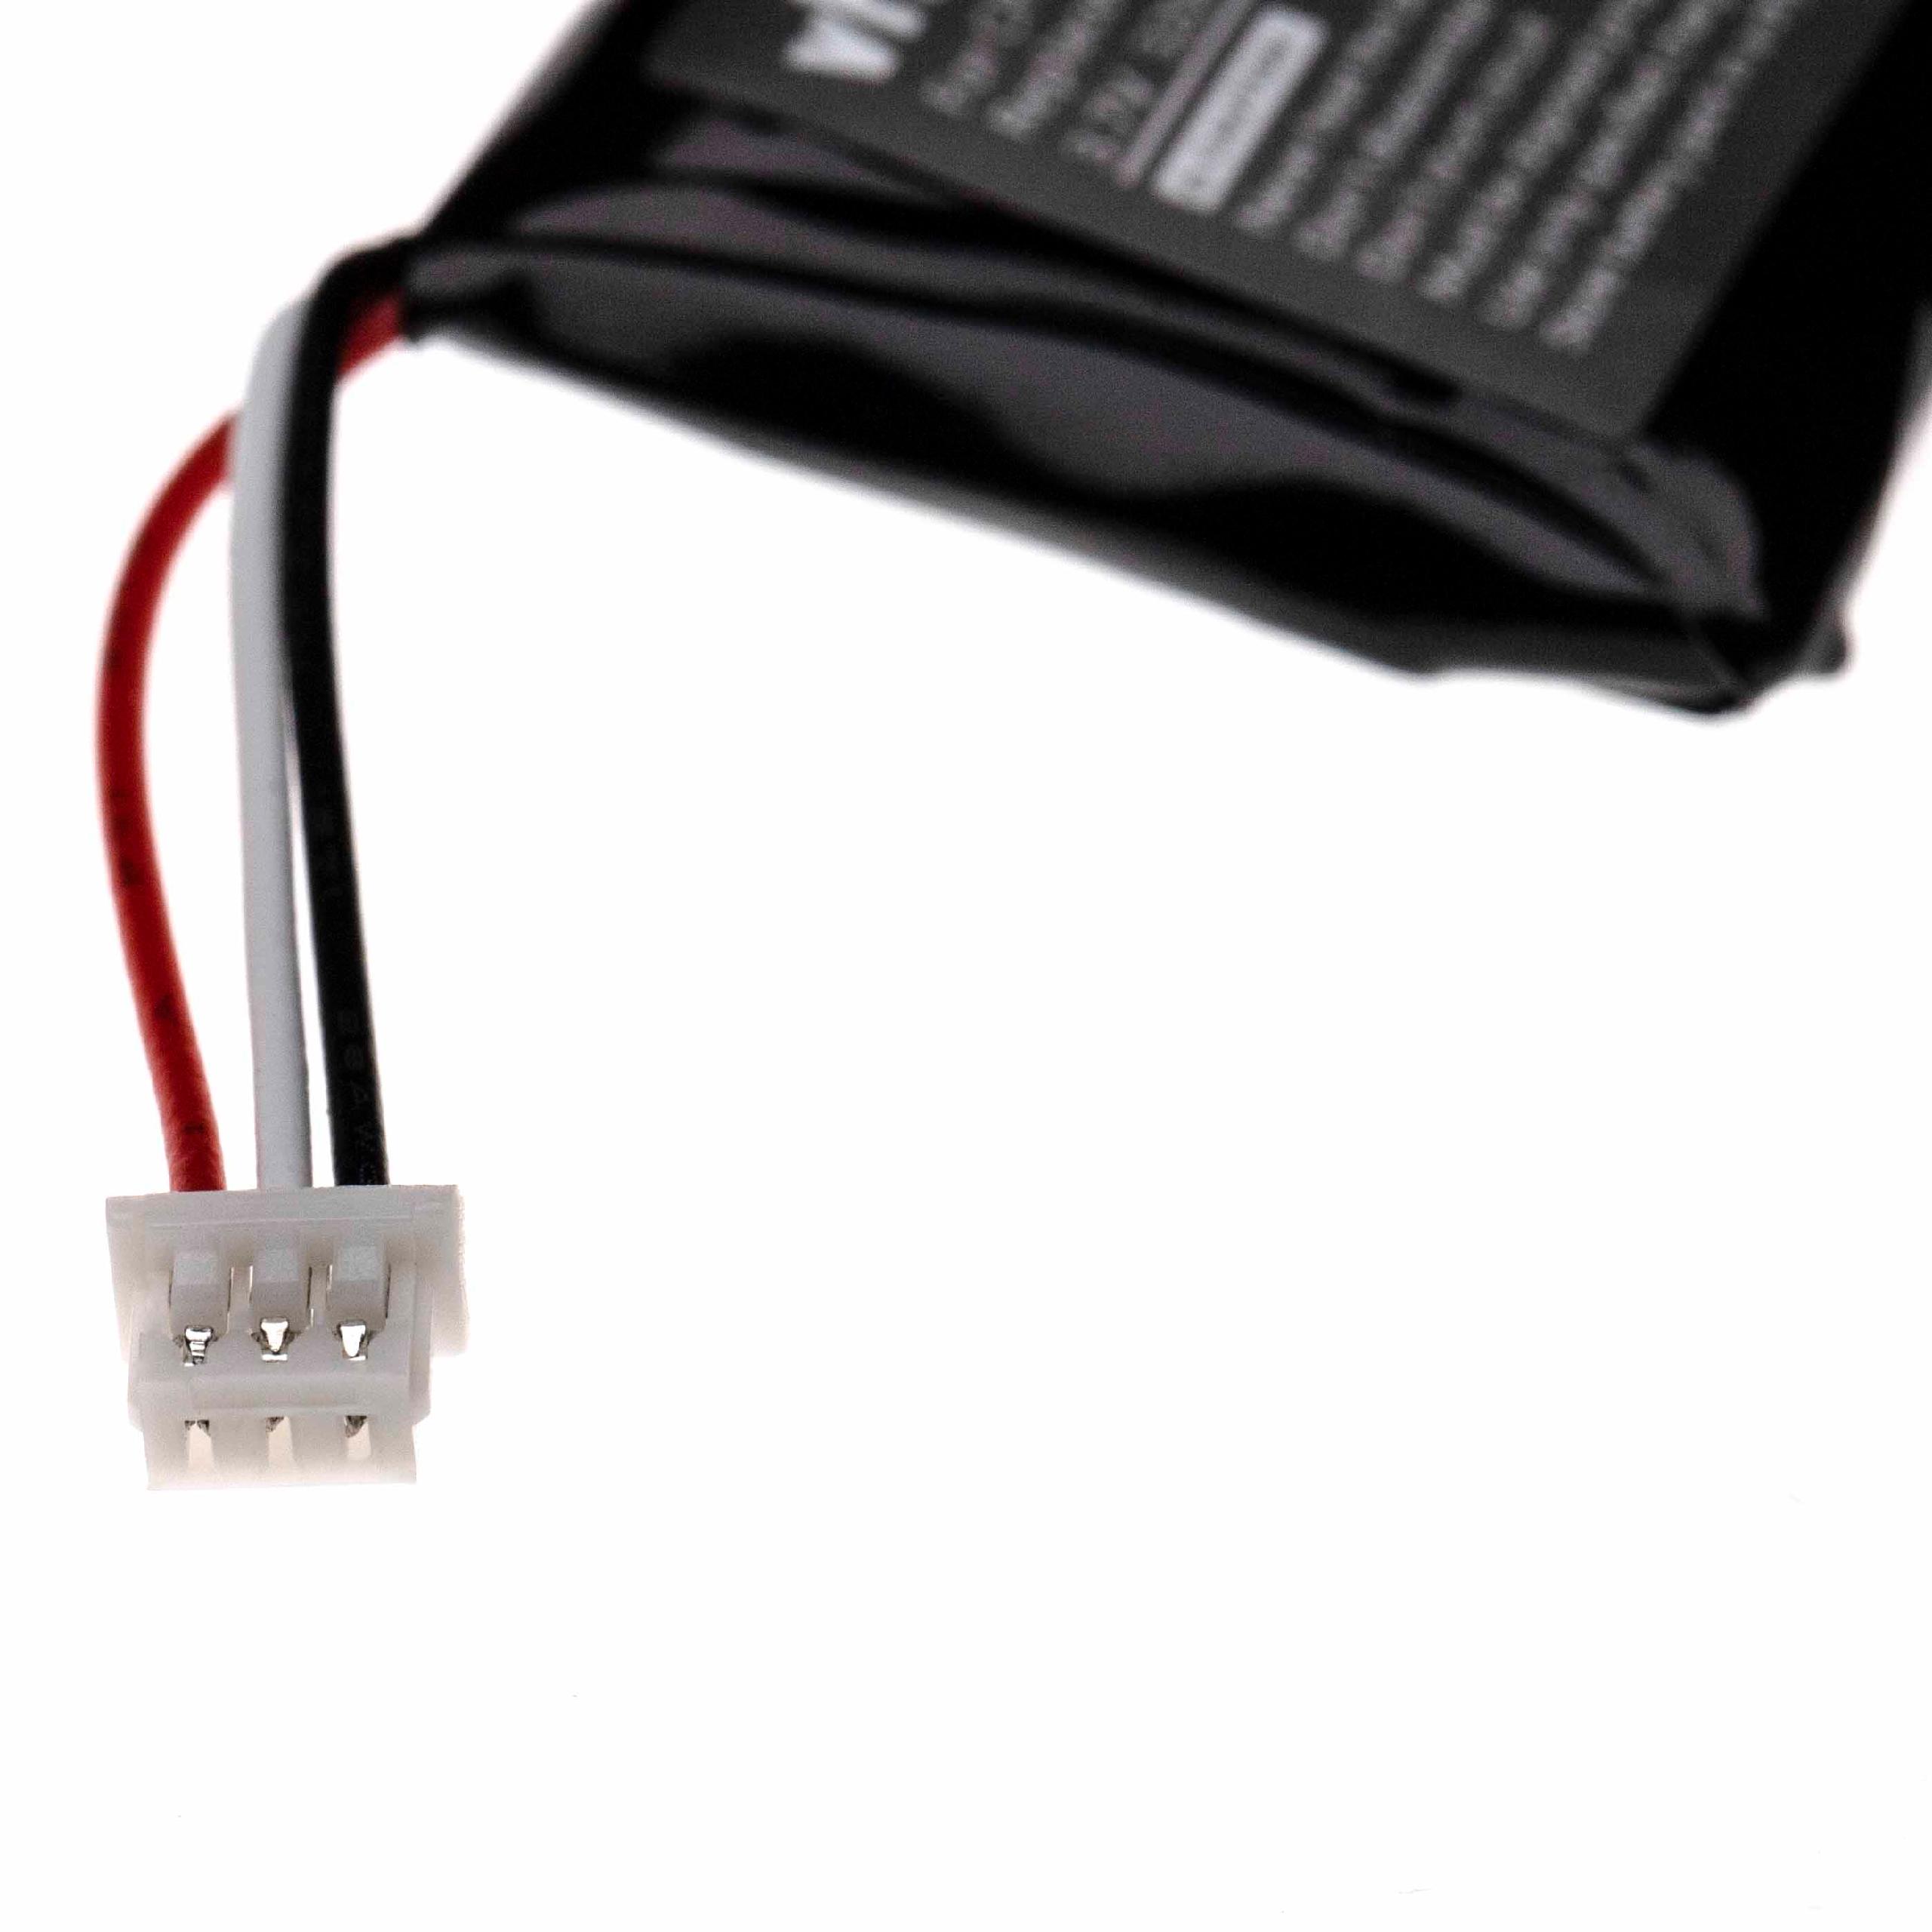 Wireless Headset Battery Replacement for Logitech L/N: 1109, AHB472625PST, 533-000067 - 320mAh 3.7V Li-polymer